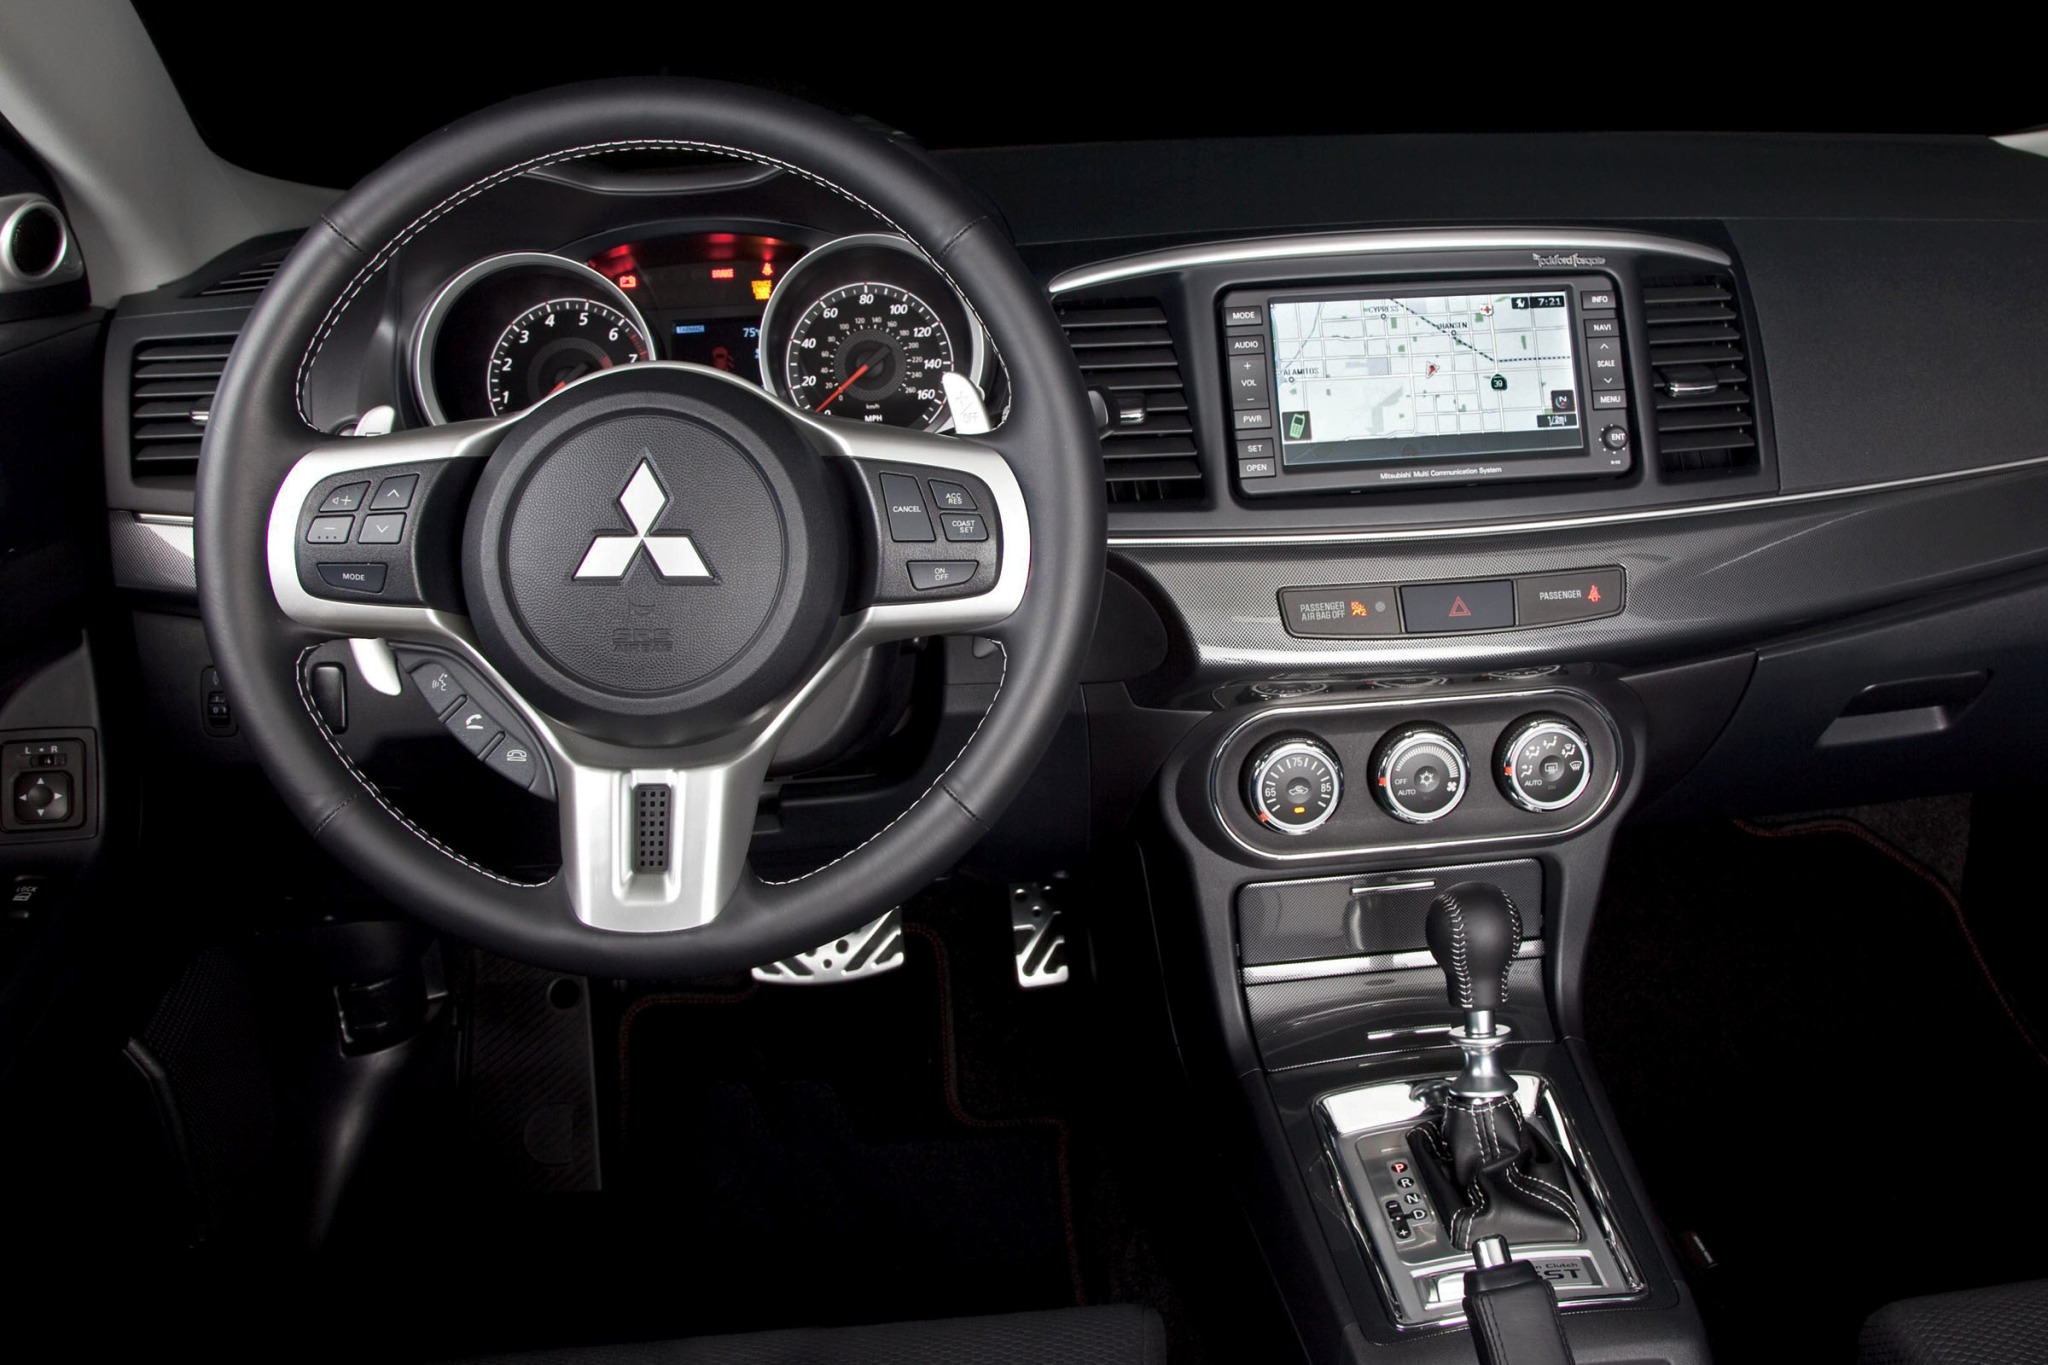 2014 Mitsubishi Lancer Sp interior #9